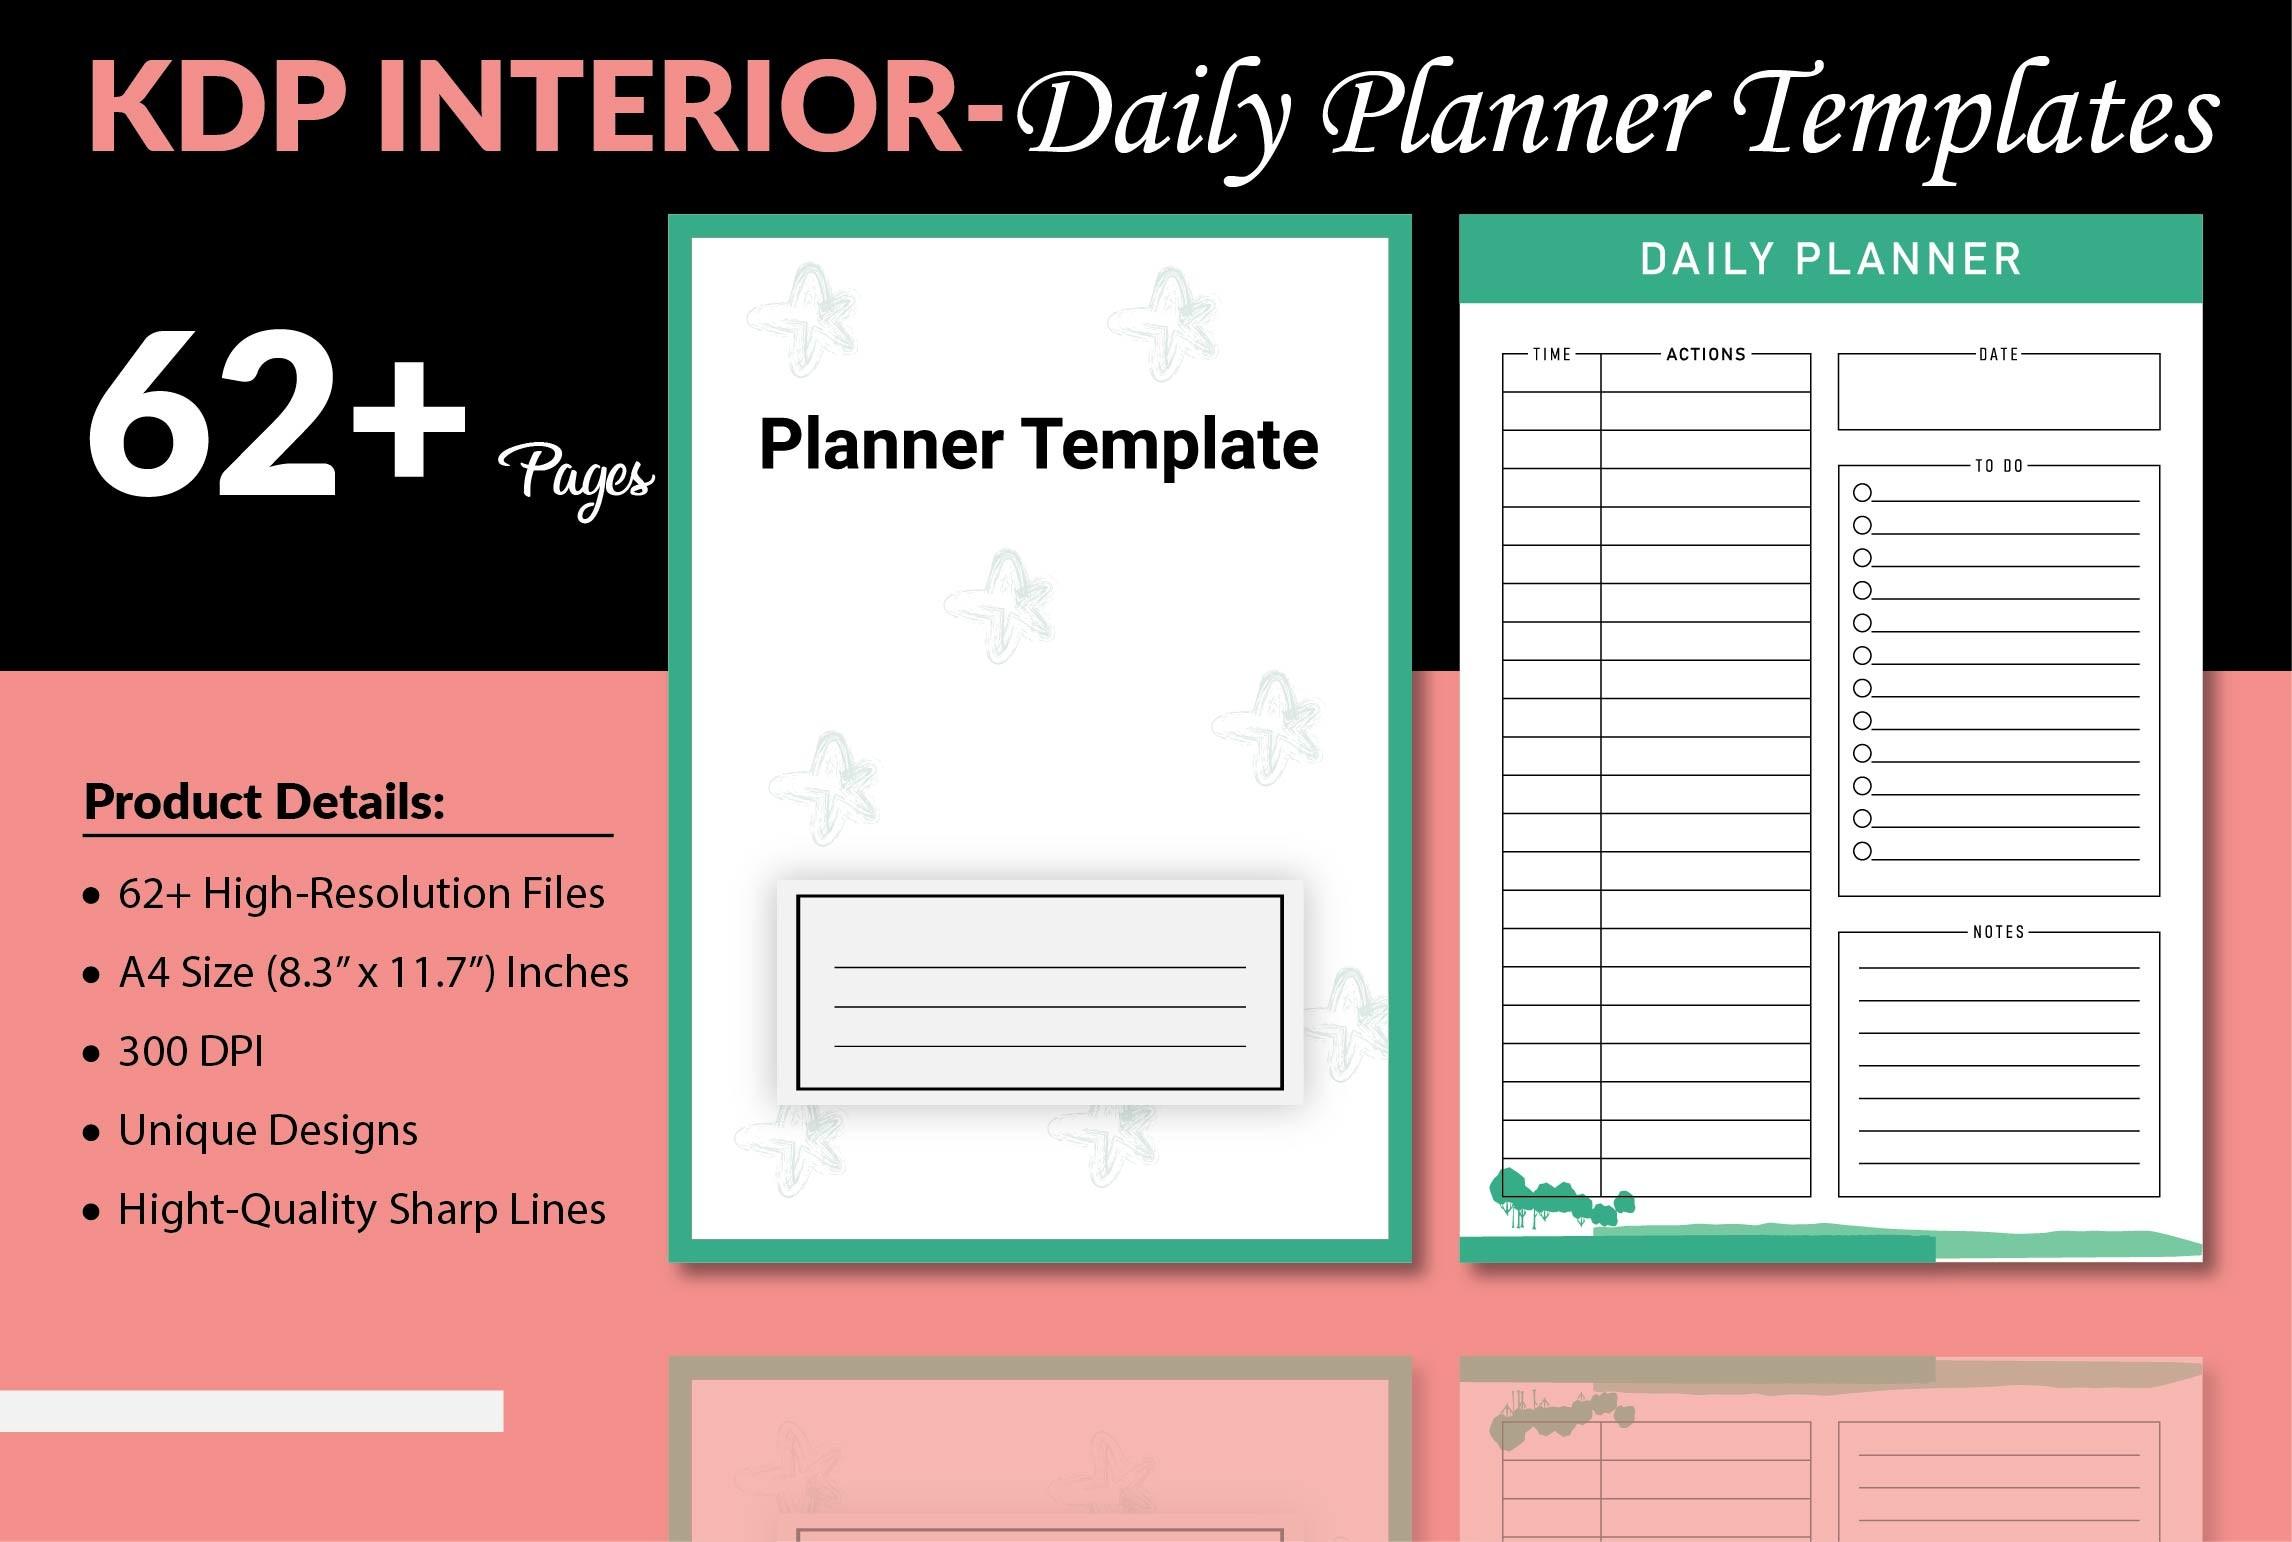 Daily Planner Printable - KDP Interior